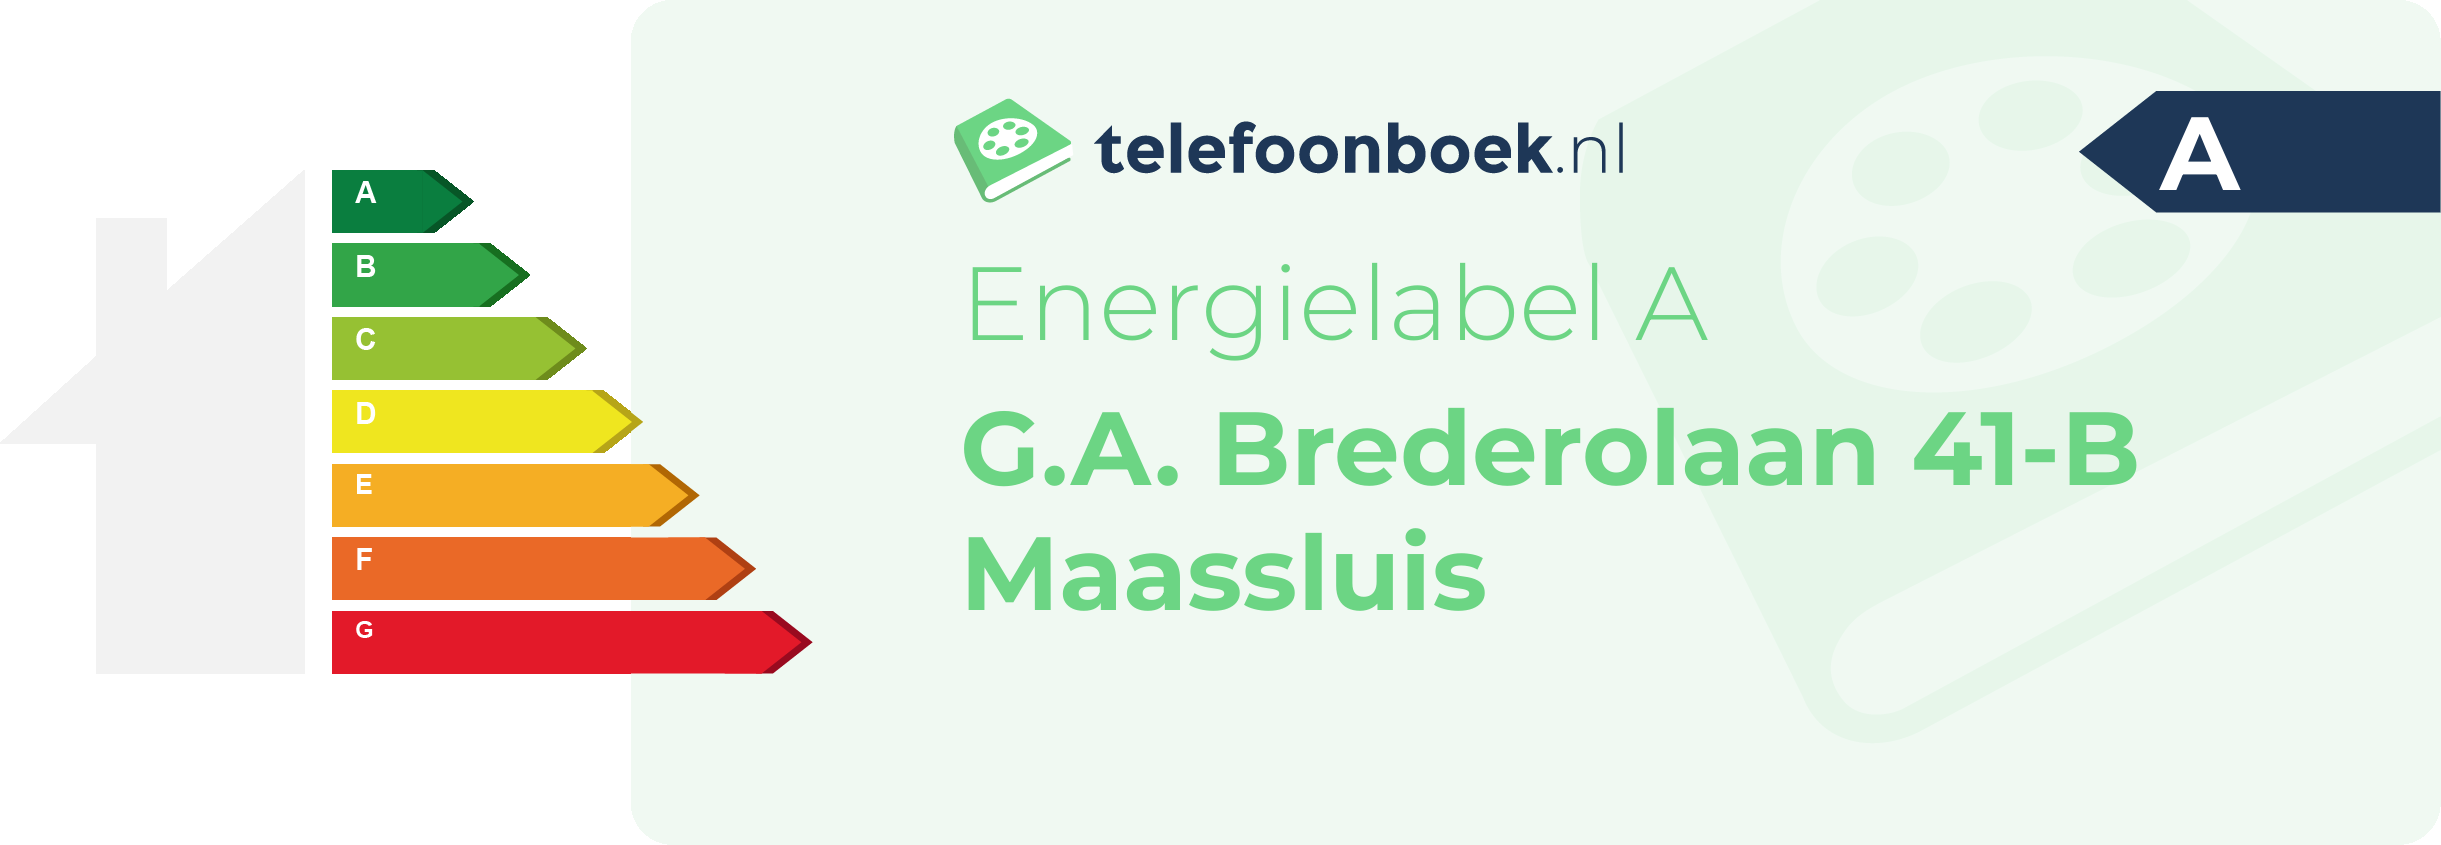 Energielabel G.A. Brederolaan 41-B Maassluis